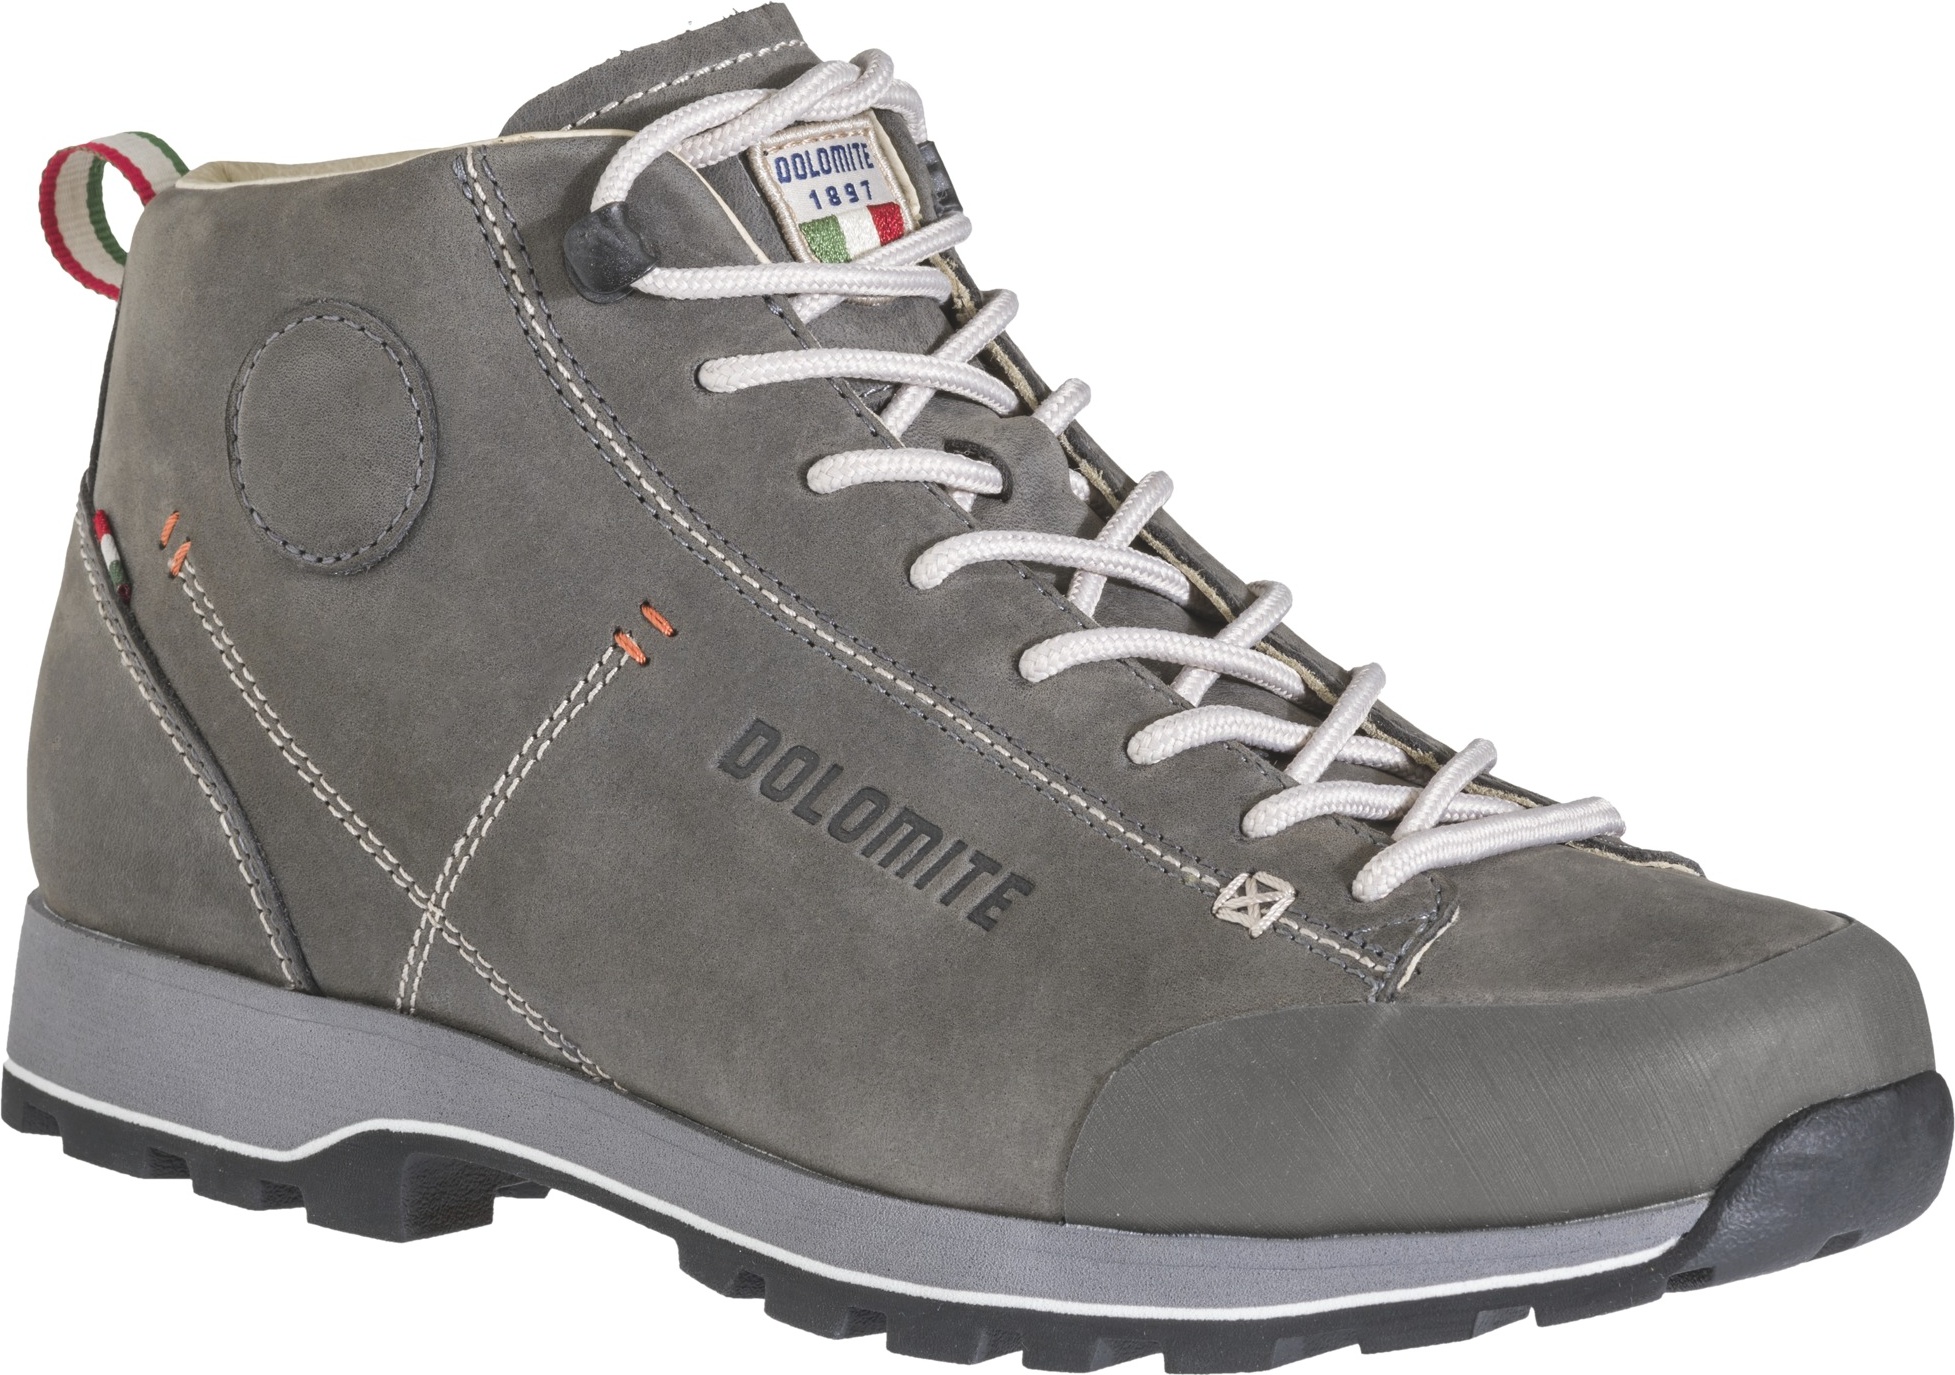 Ботинки Dolomite 54 Mid Fg, grey, 10.5 UK